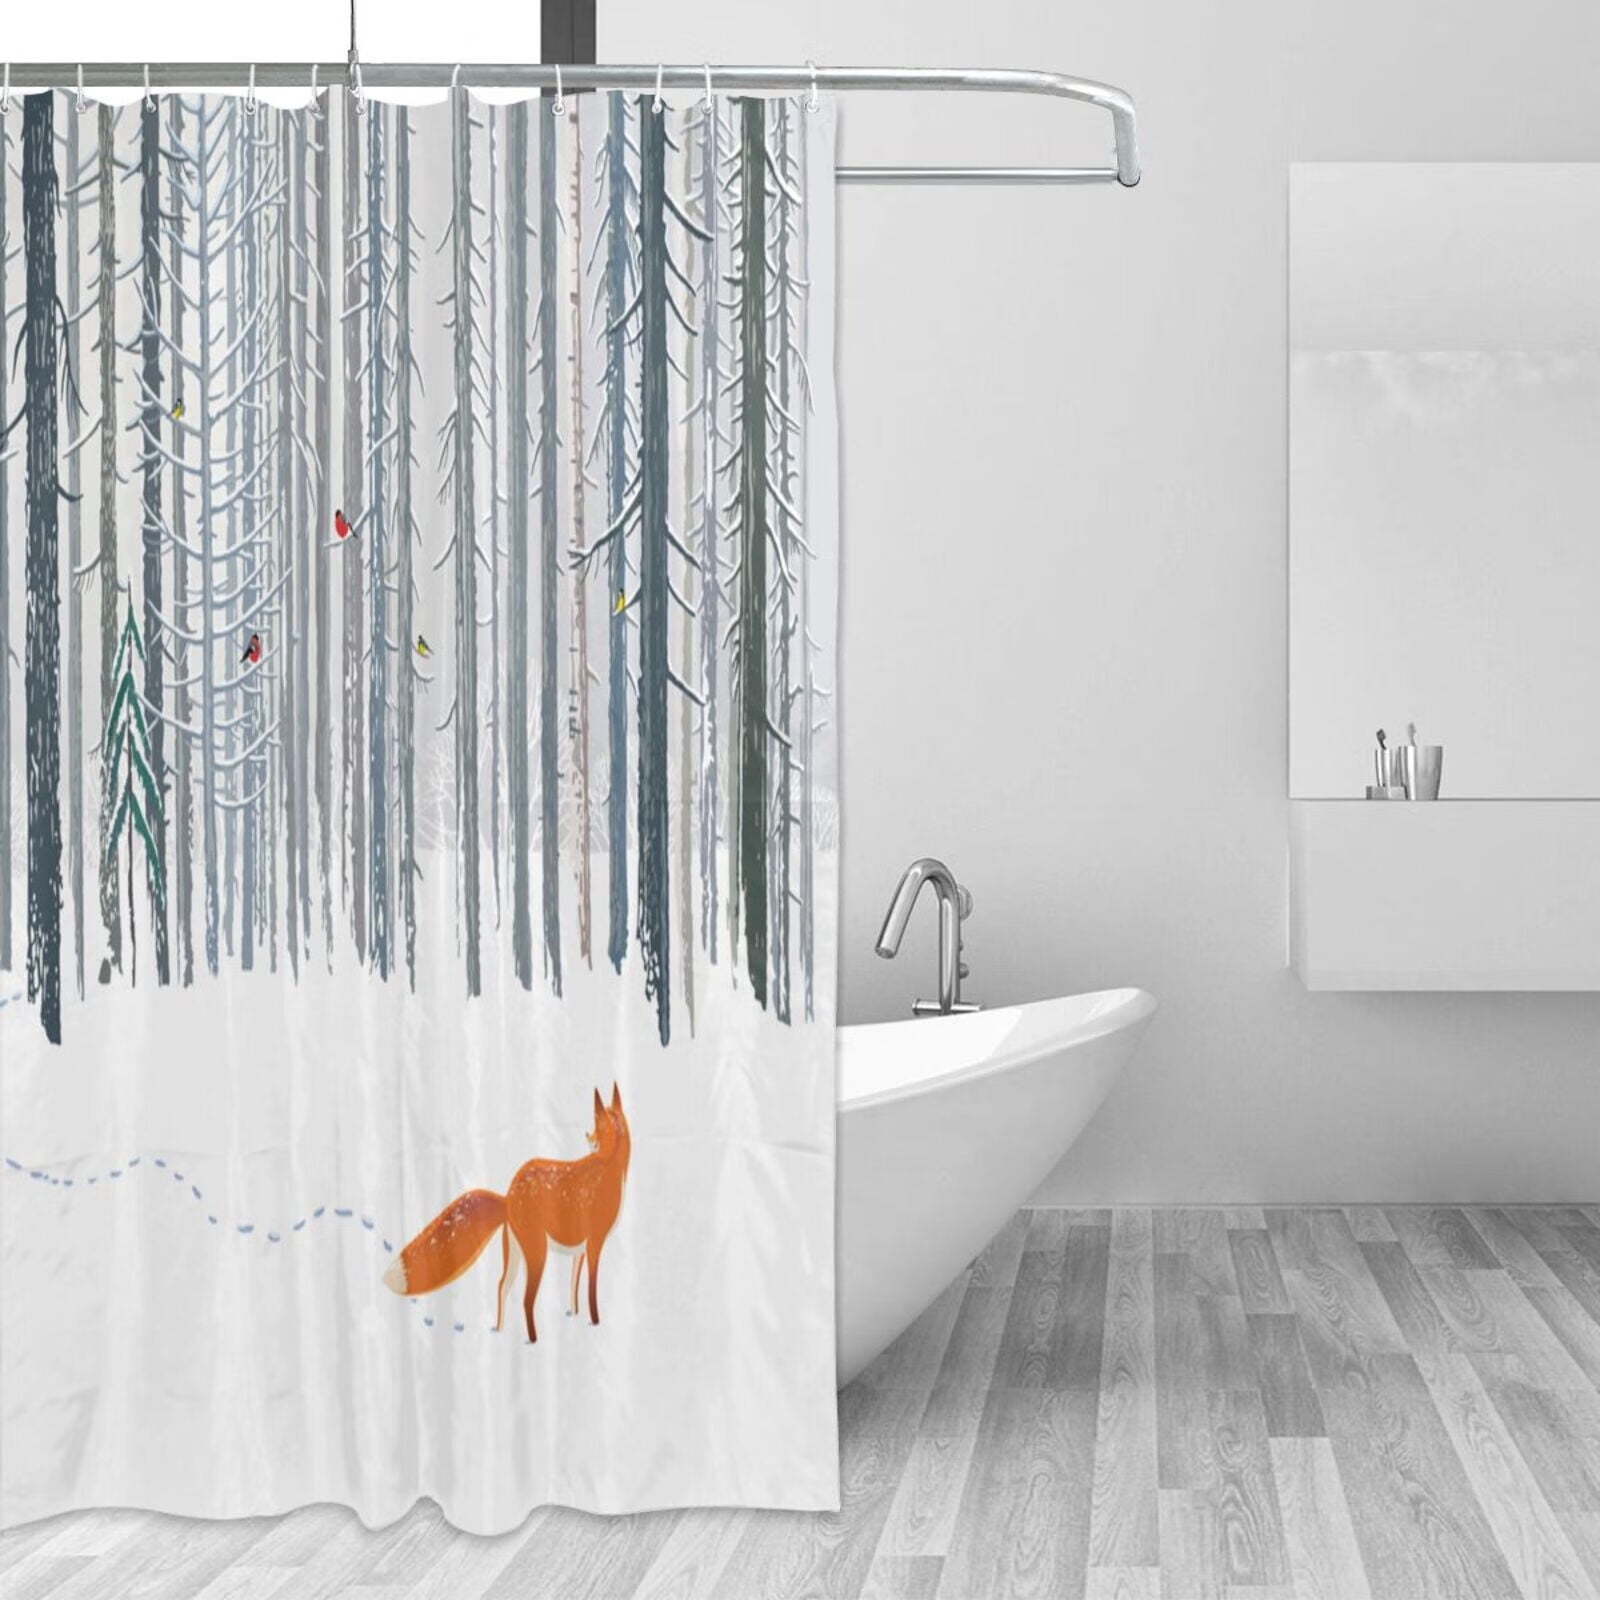 LB Winter Forest Shower Curtain Decor, Sunshine Through Jungle Snow Scenery  Shower Curtain for Bathroom 78x72 Inch Polyester Fabric Bathroom